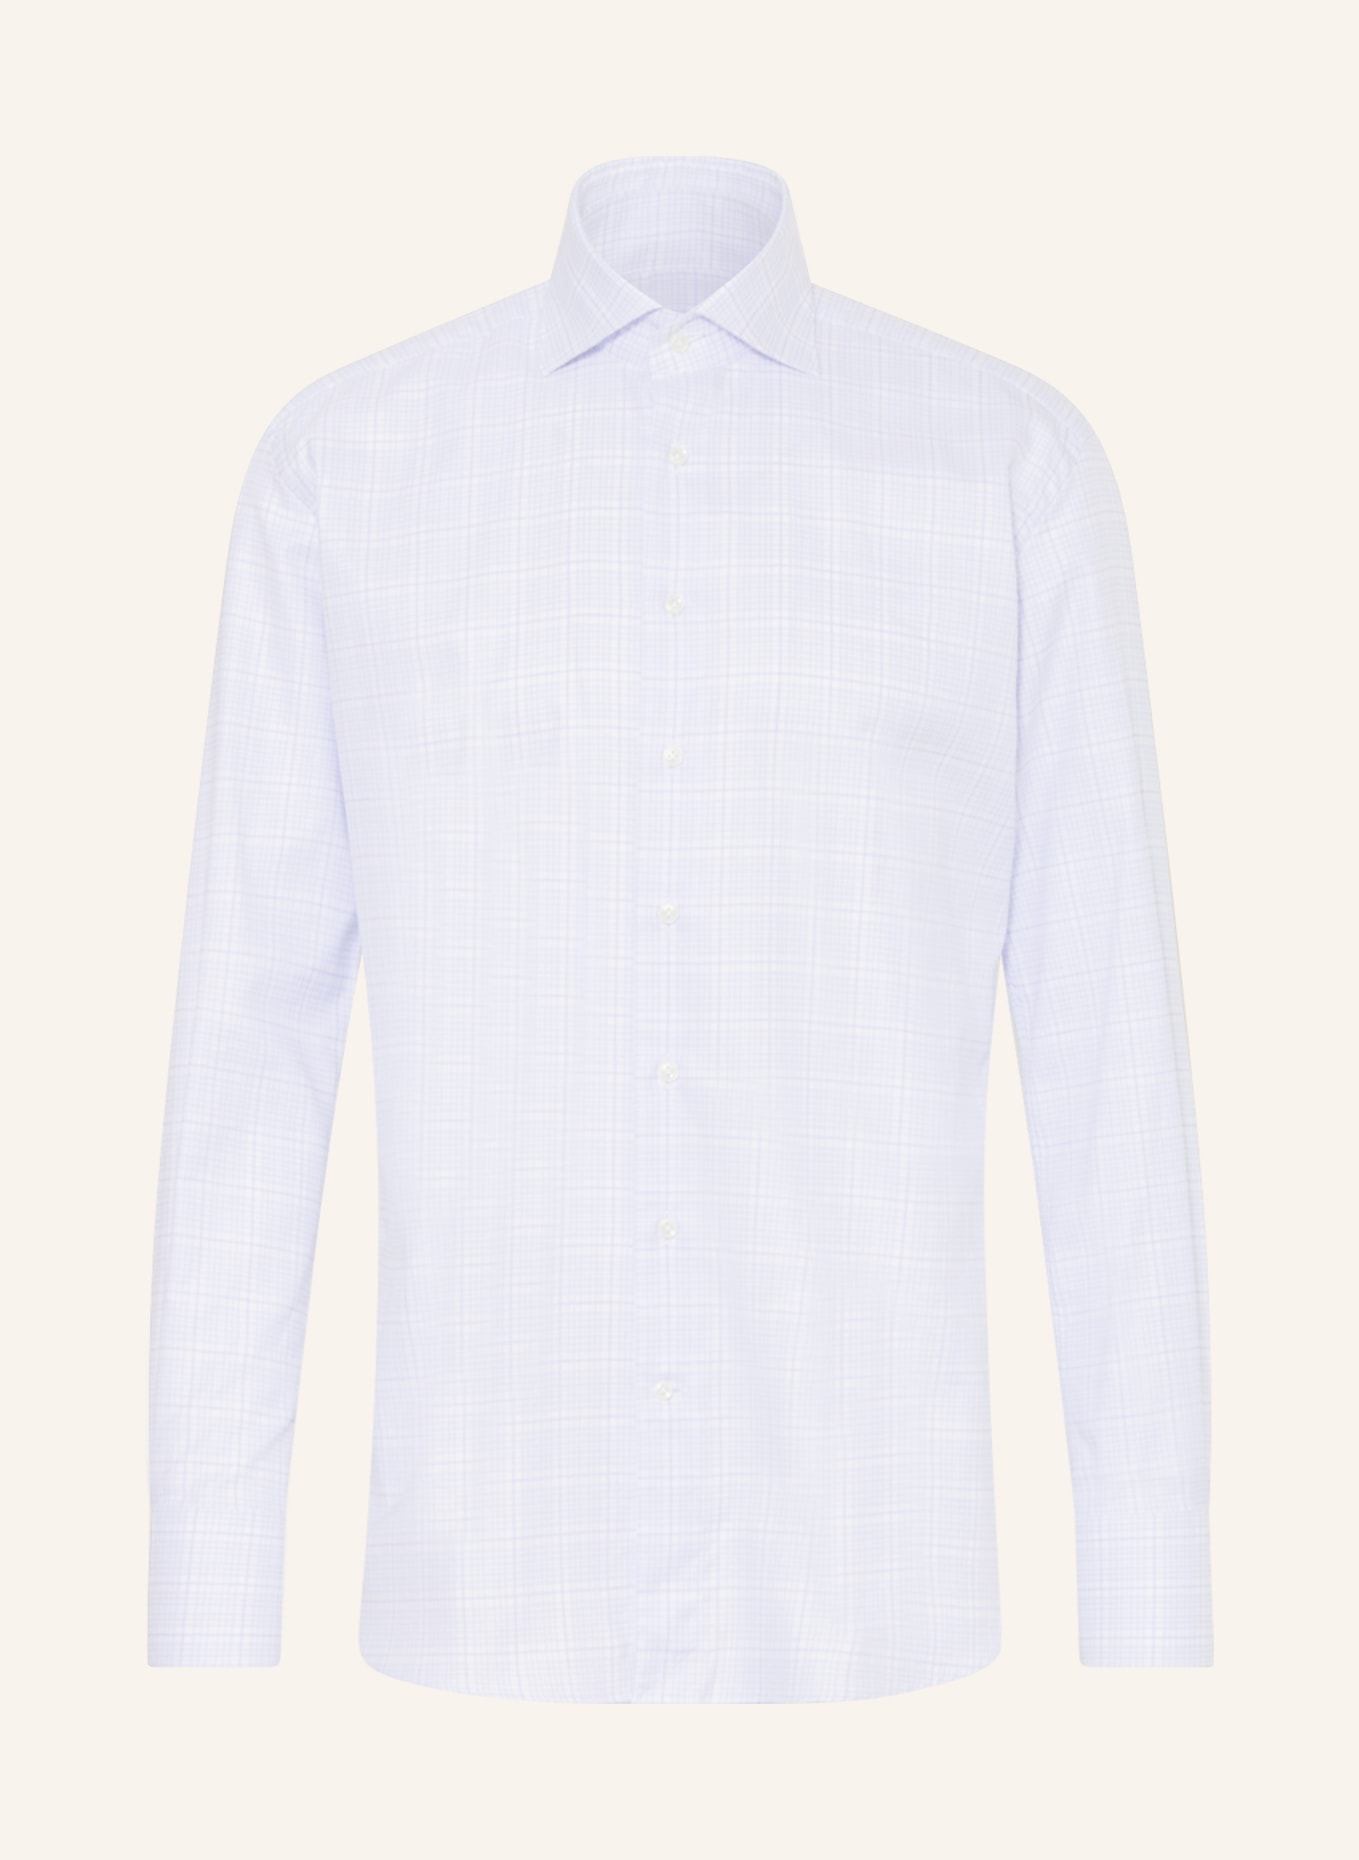 ARTIGIANO Shirt fitted fit, Color: LIGHT BLUE/ WHITE (Image 1)